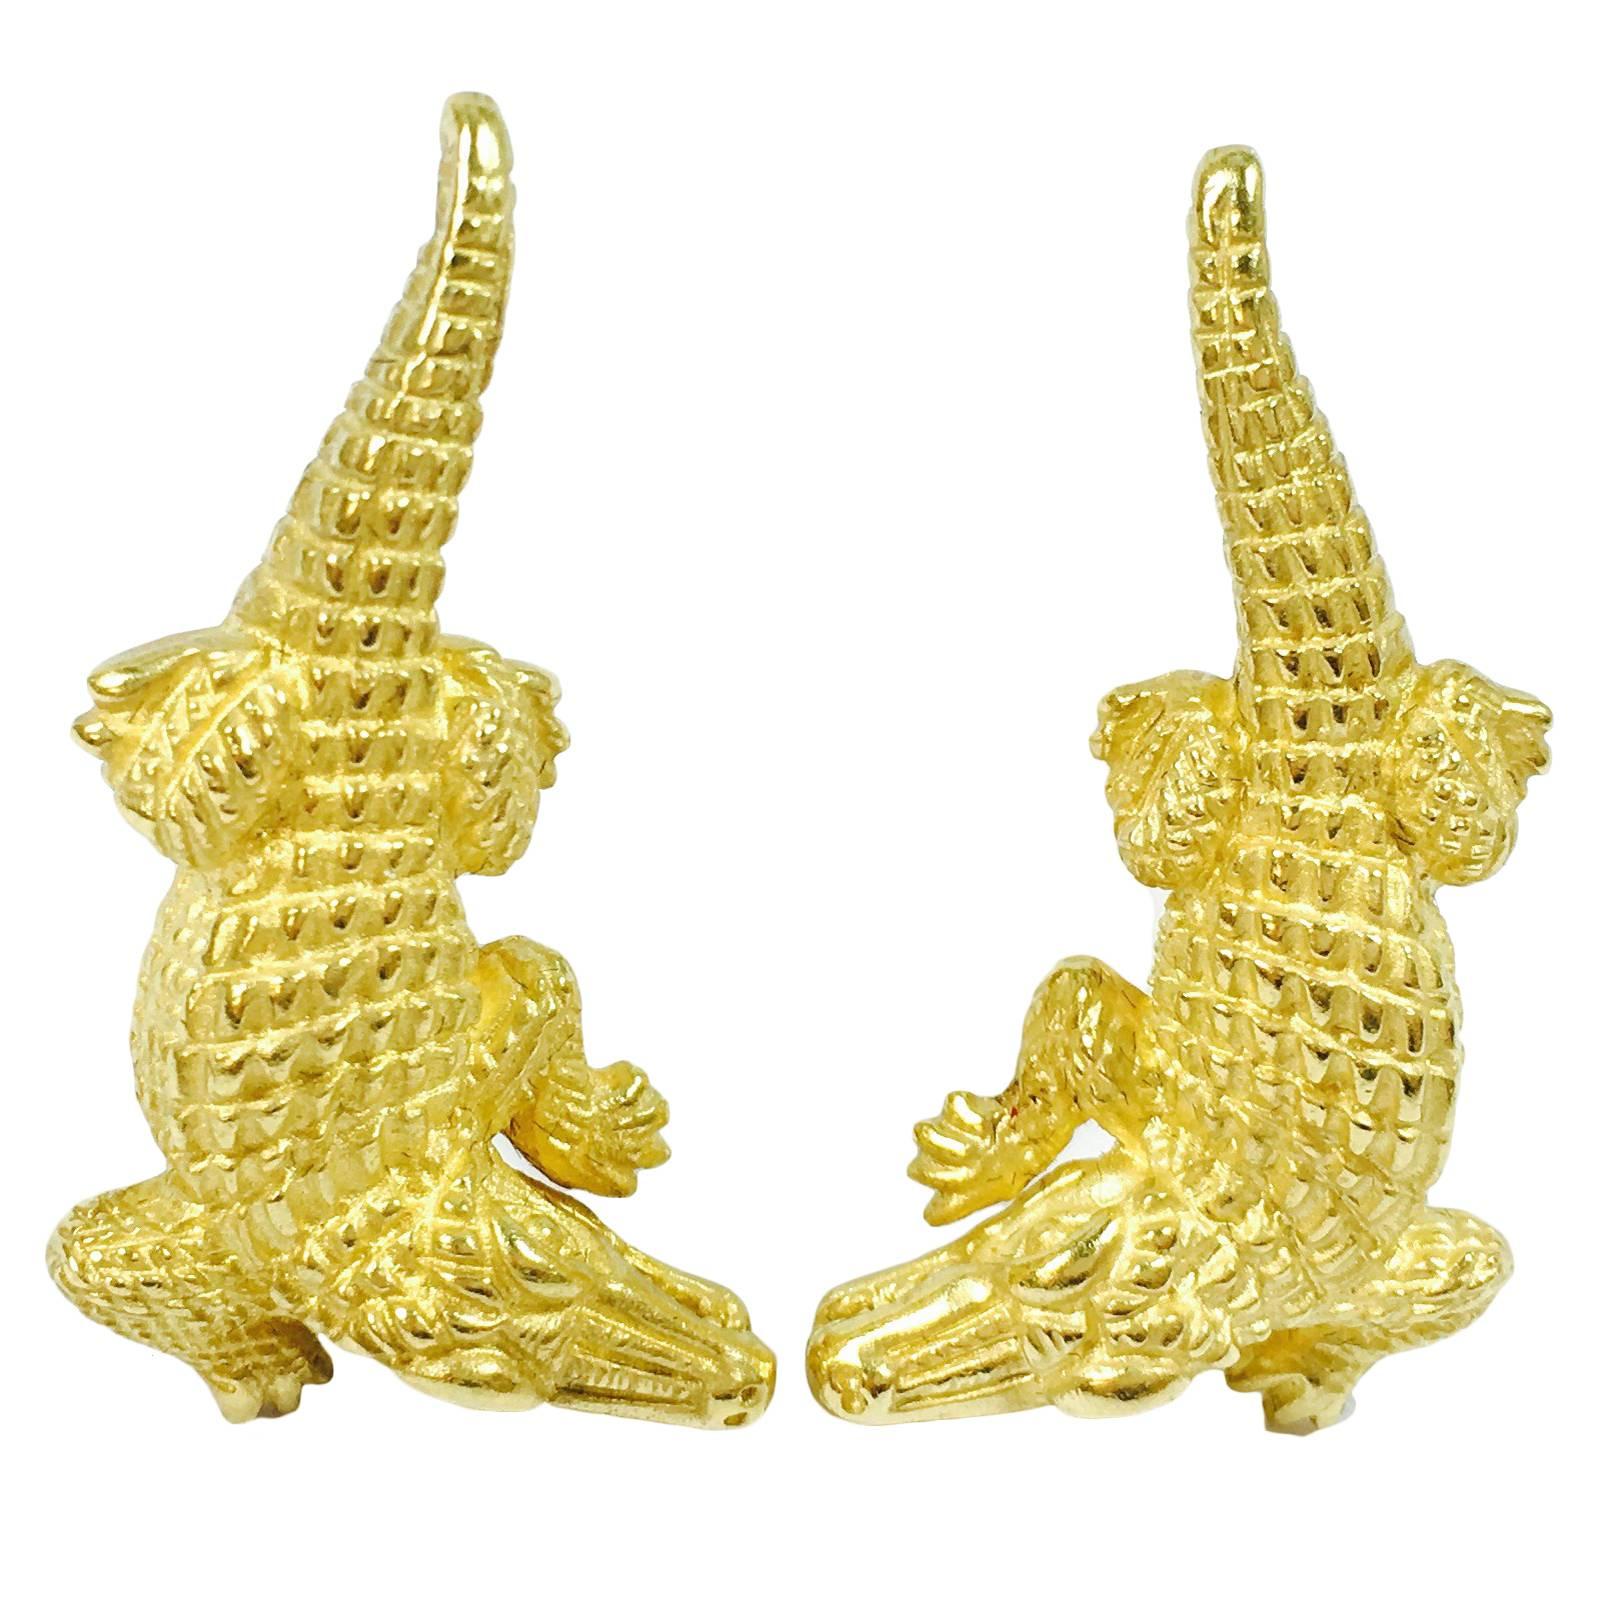 Barry Kieselstein-Cord Gold Alligator Cufflinks